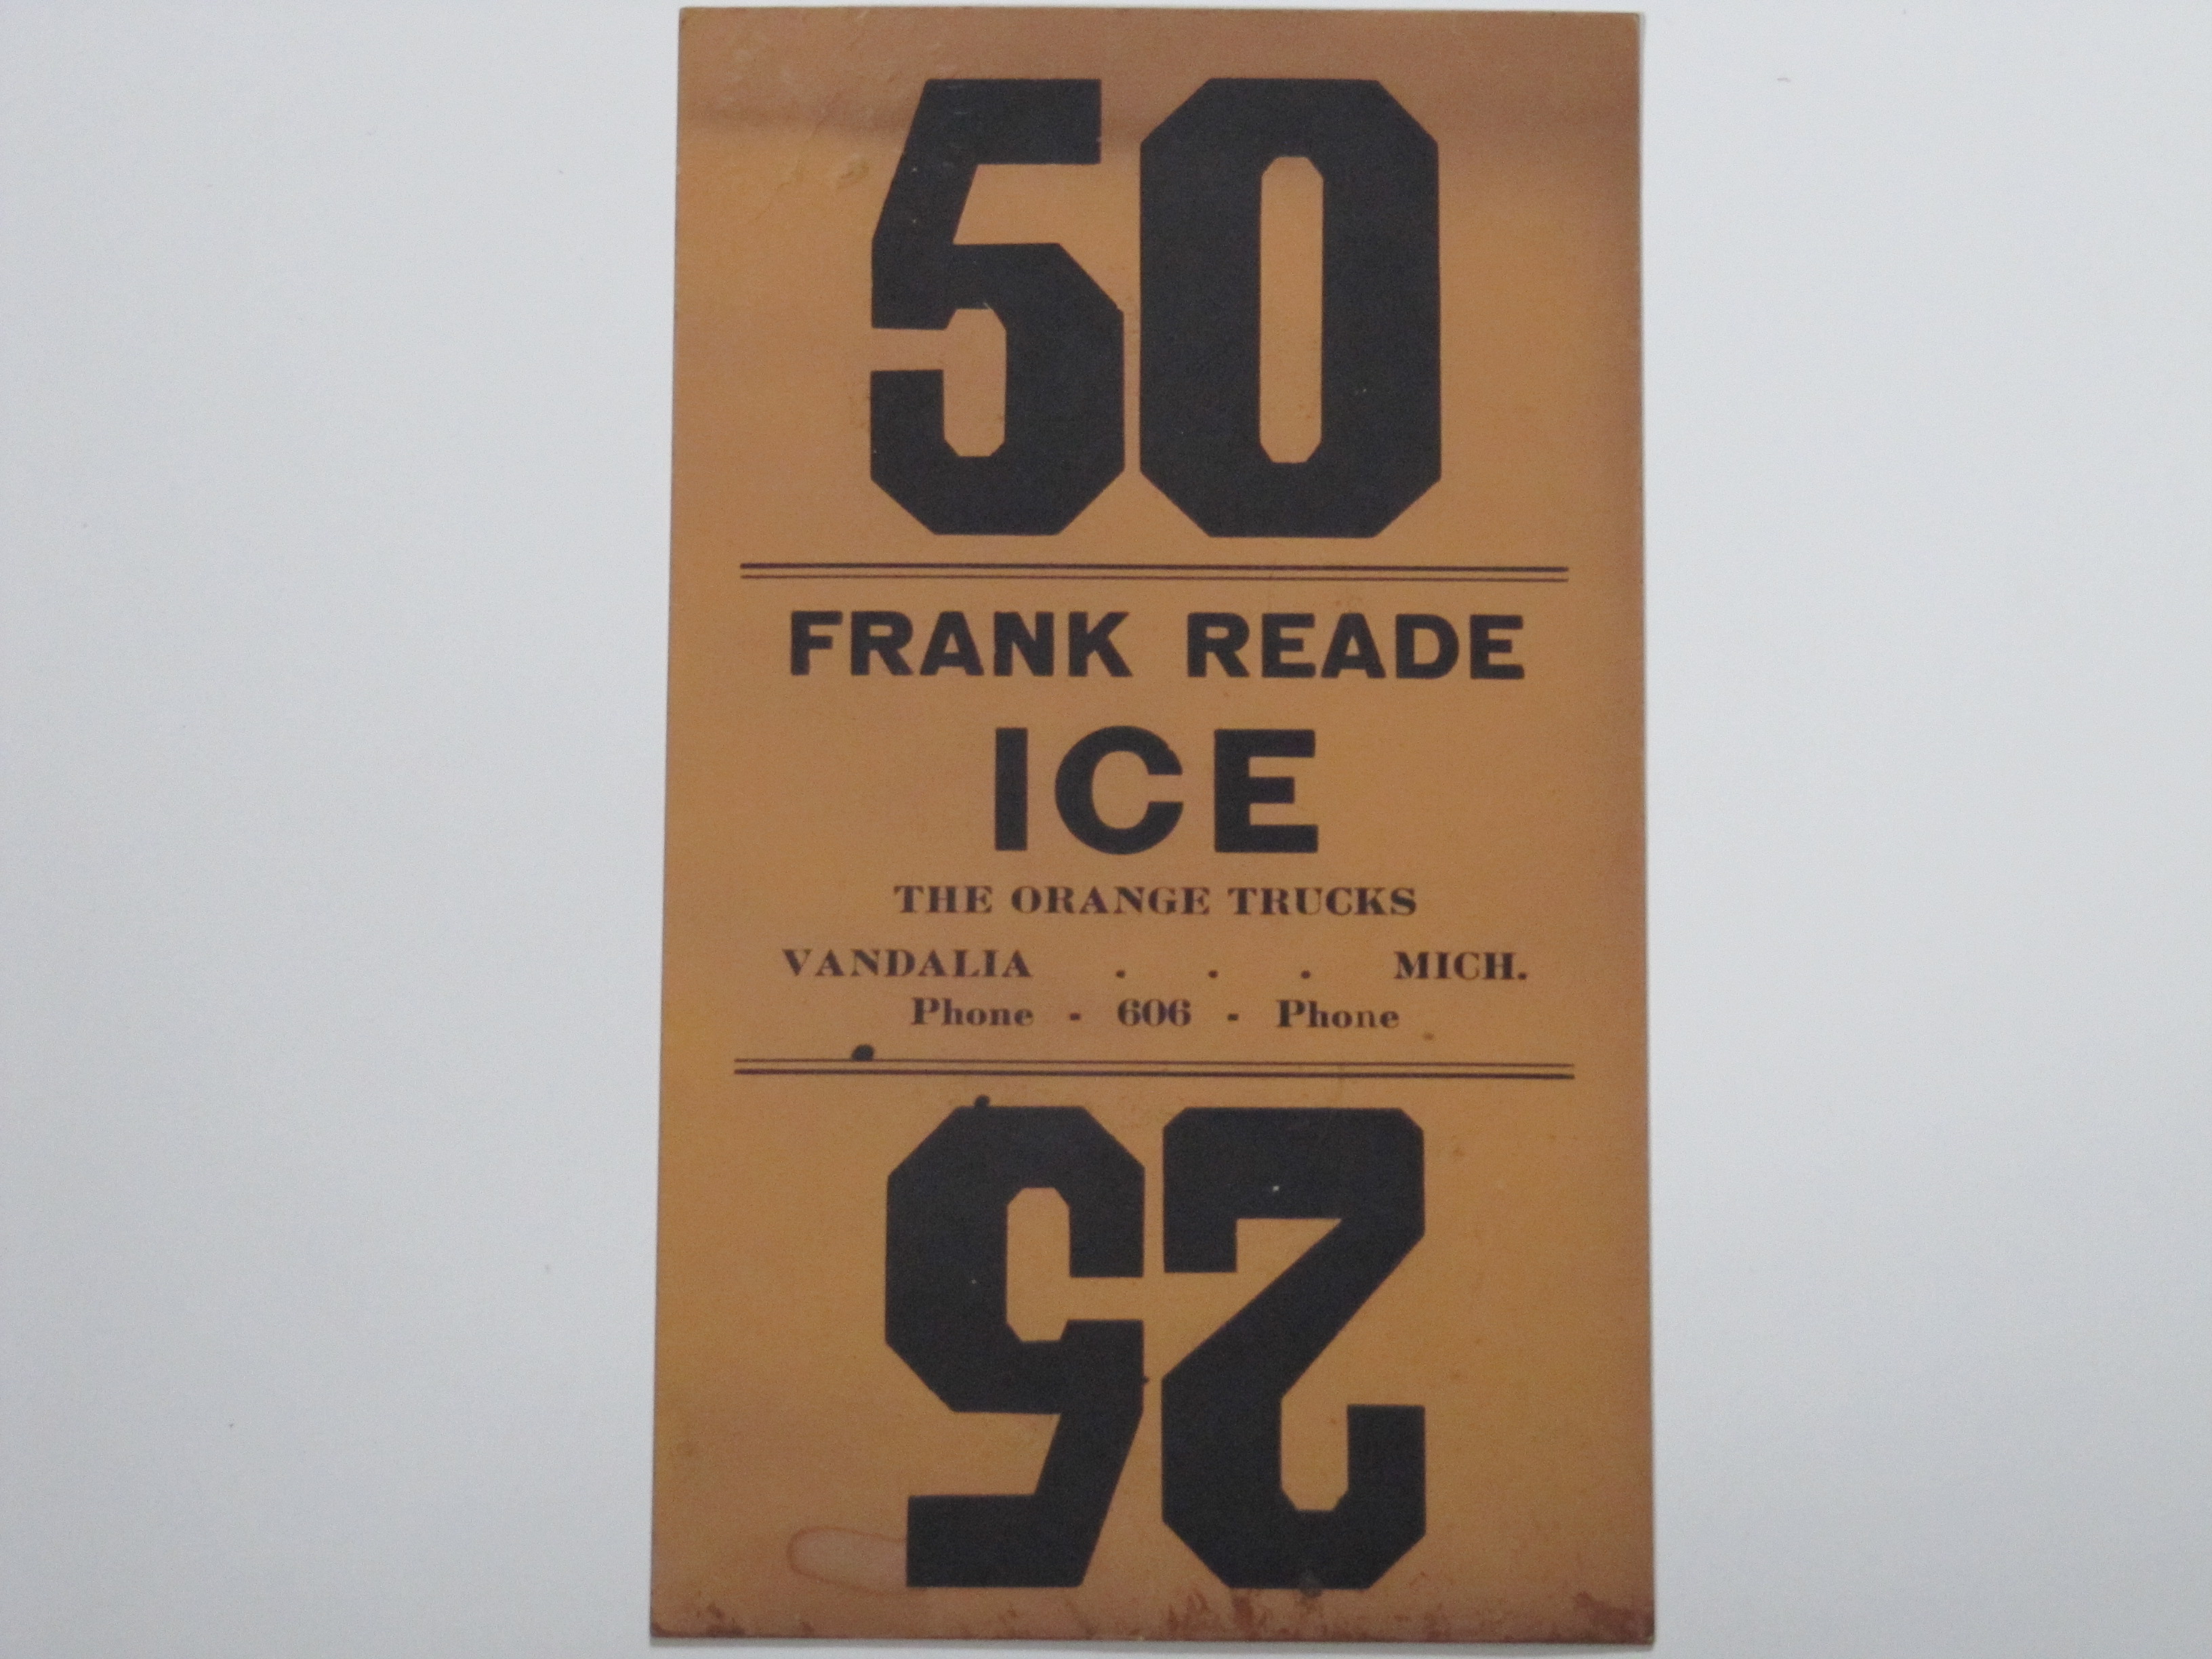 Frank Reade Ice